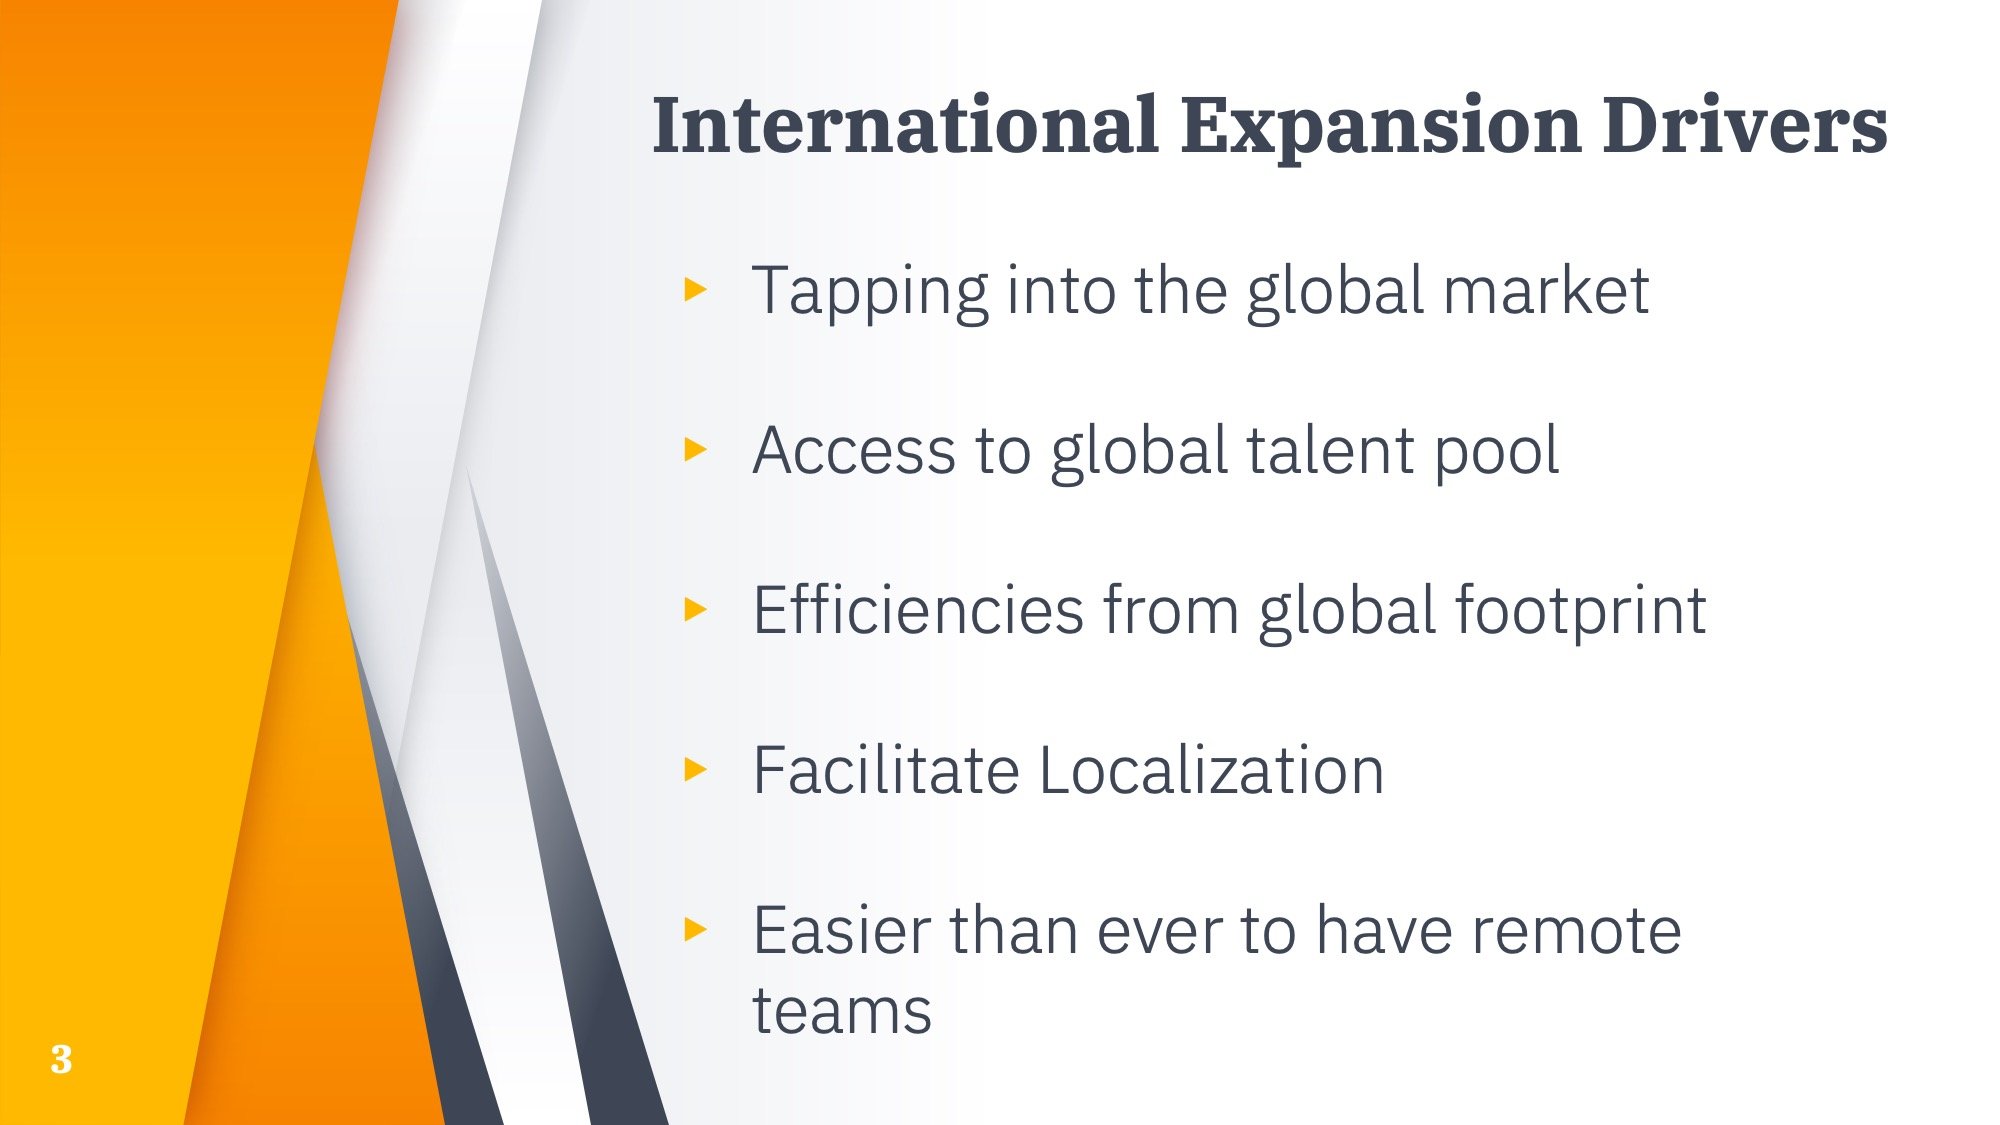 International expansion drivers